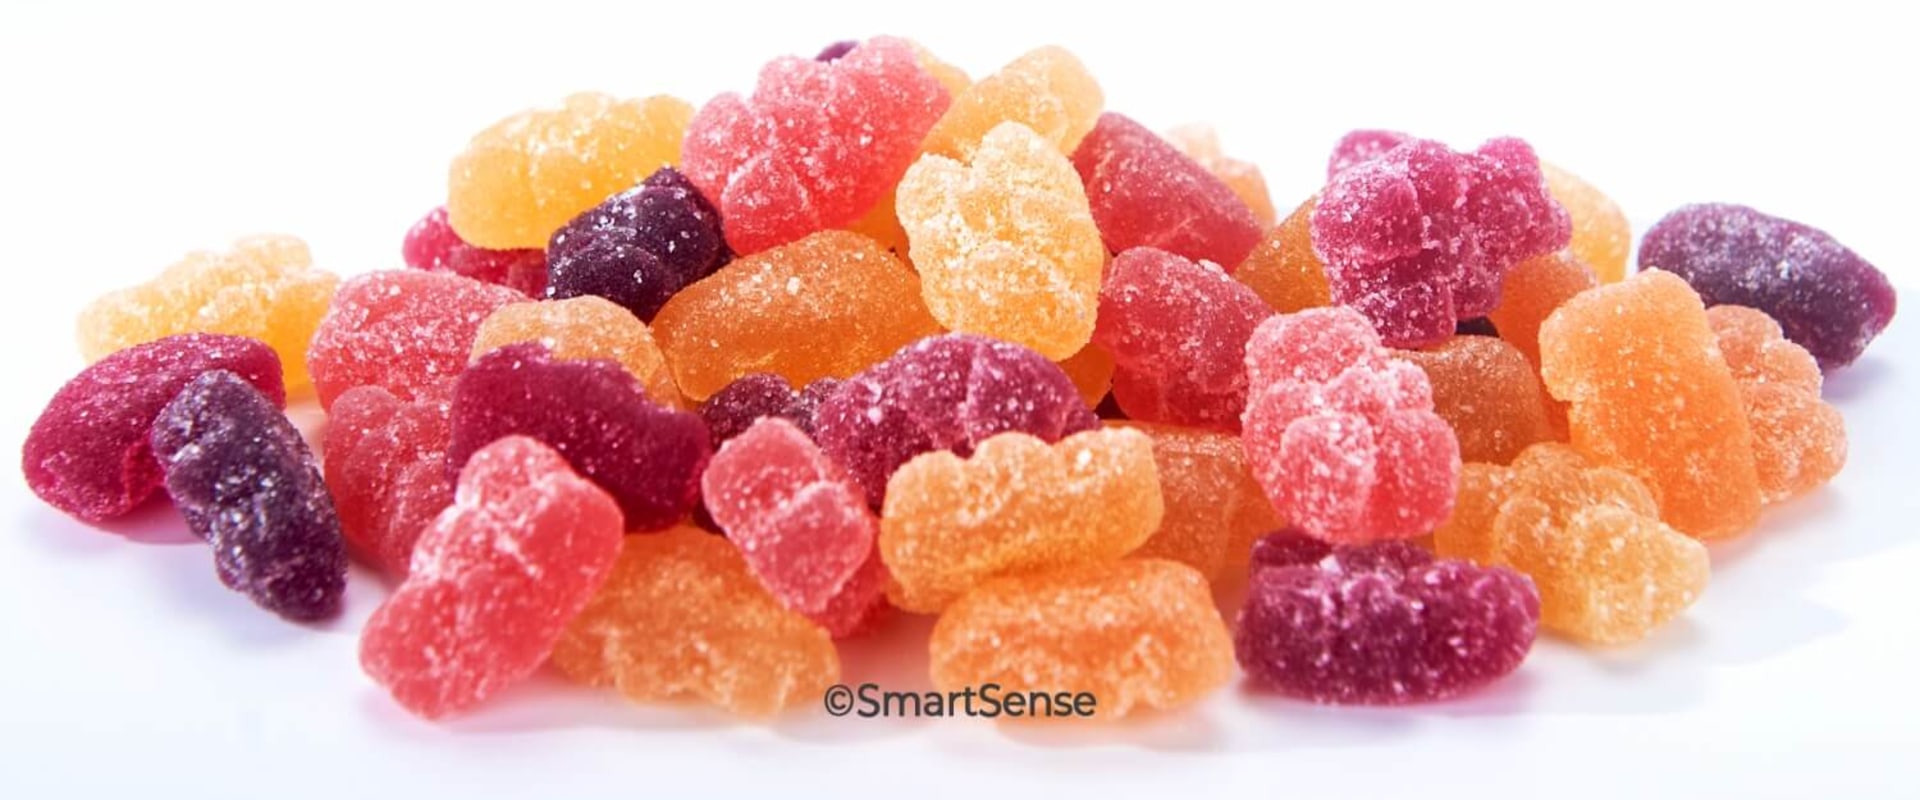 Wildcrafted Sweeteners in Gummies: Exploring the Benefits